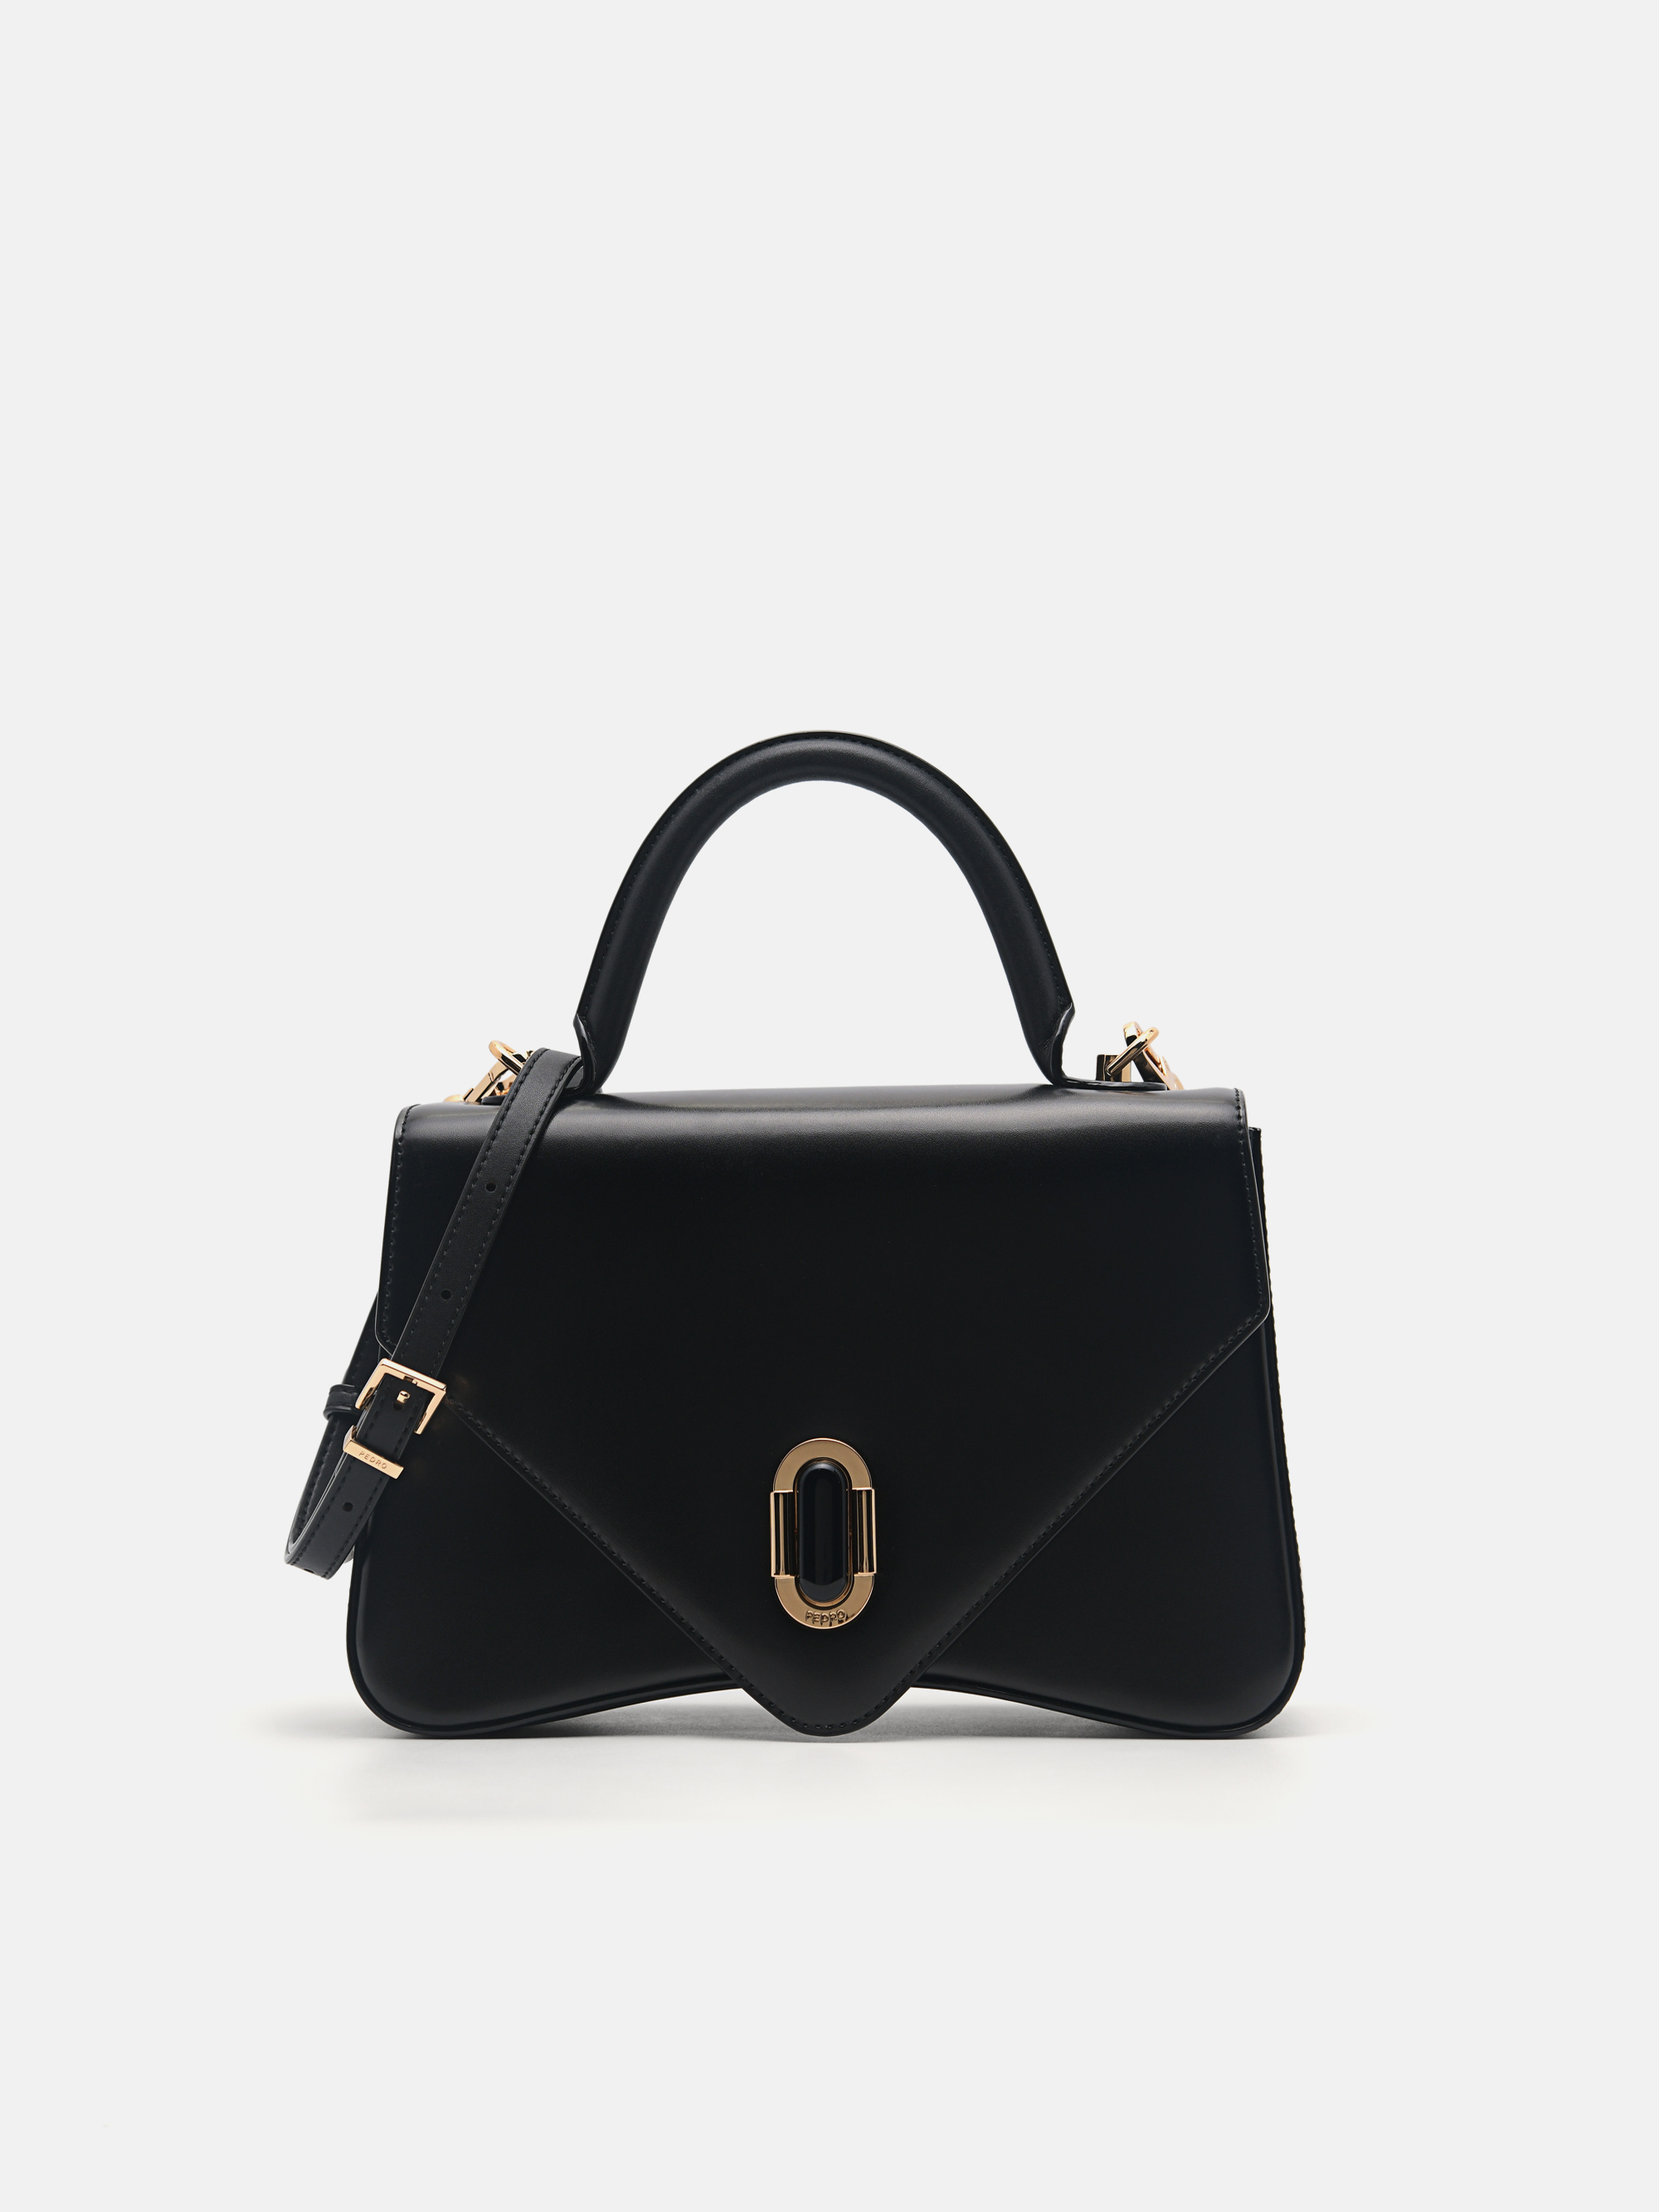 Zenith Black Leather Handbag - PEDRO SG